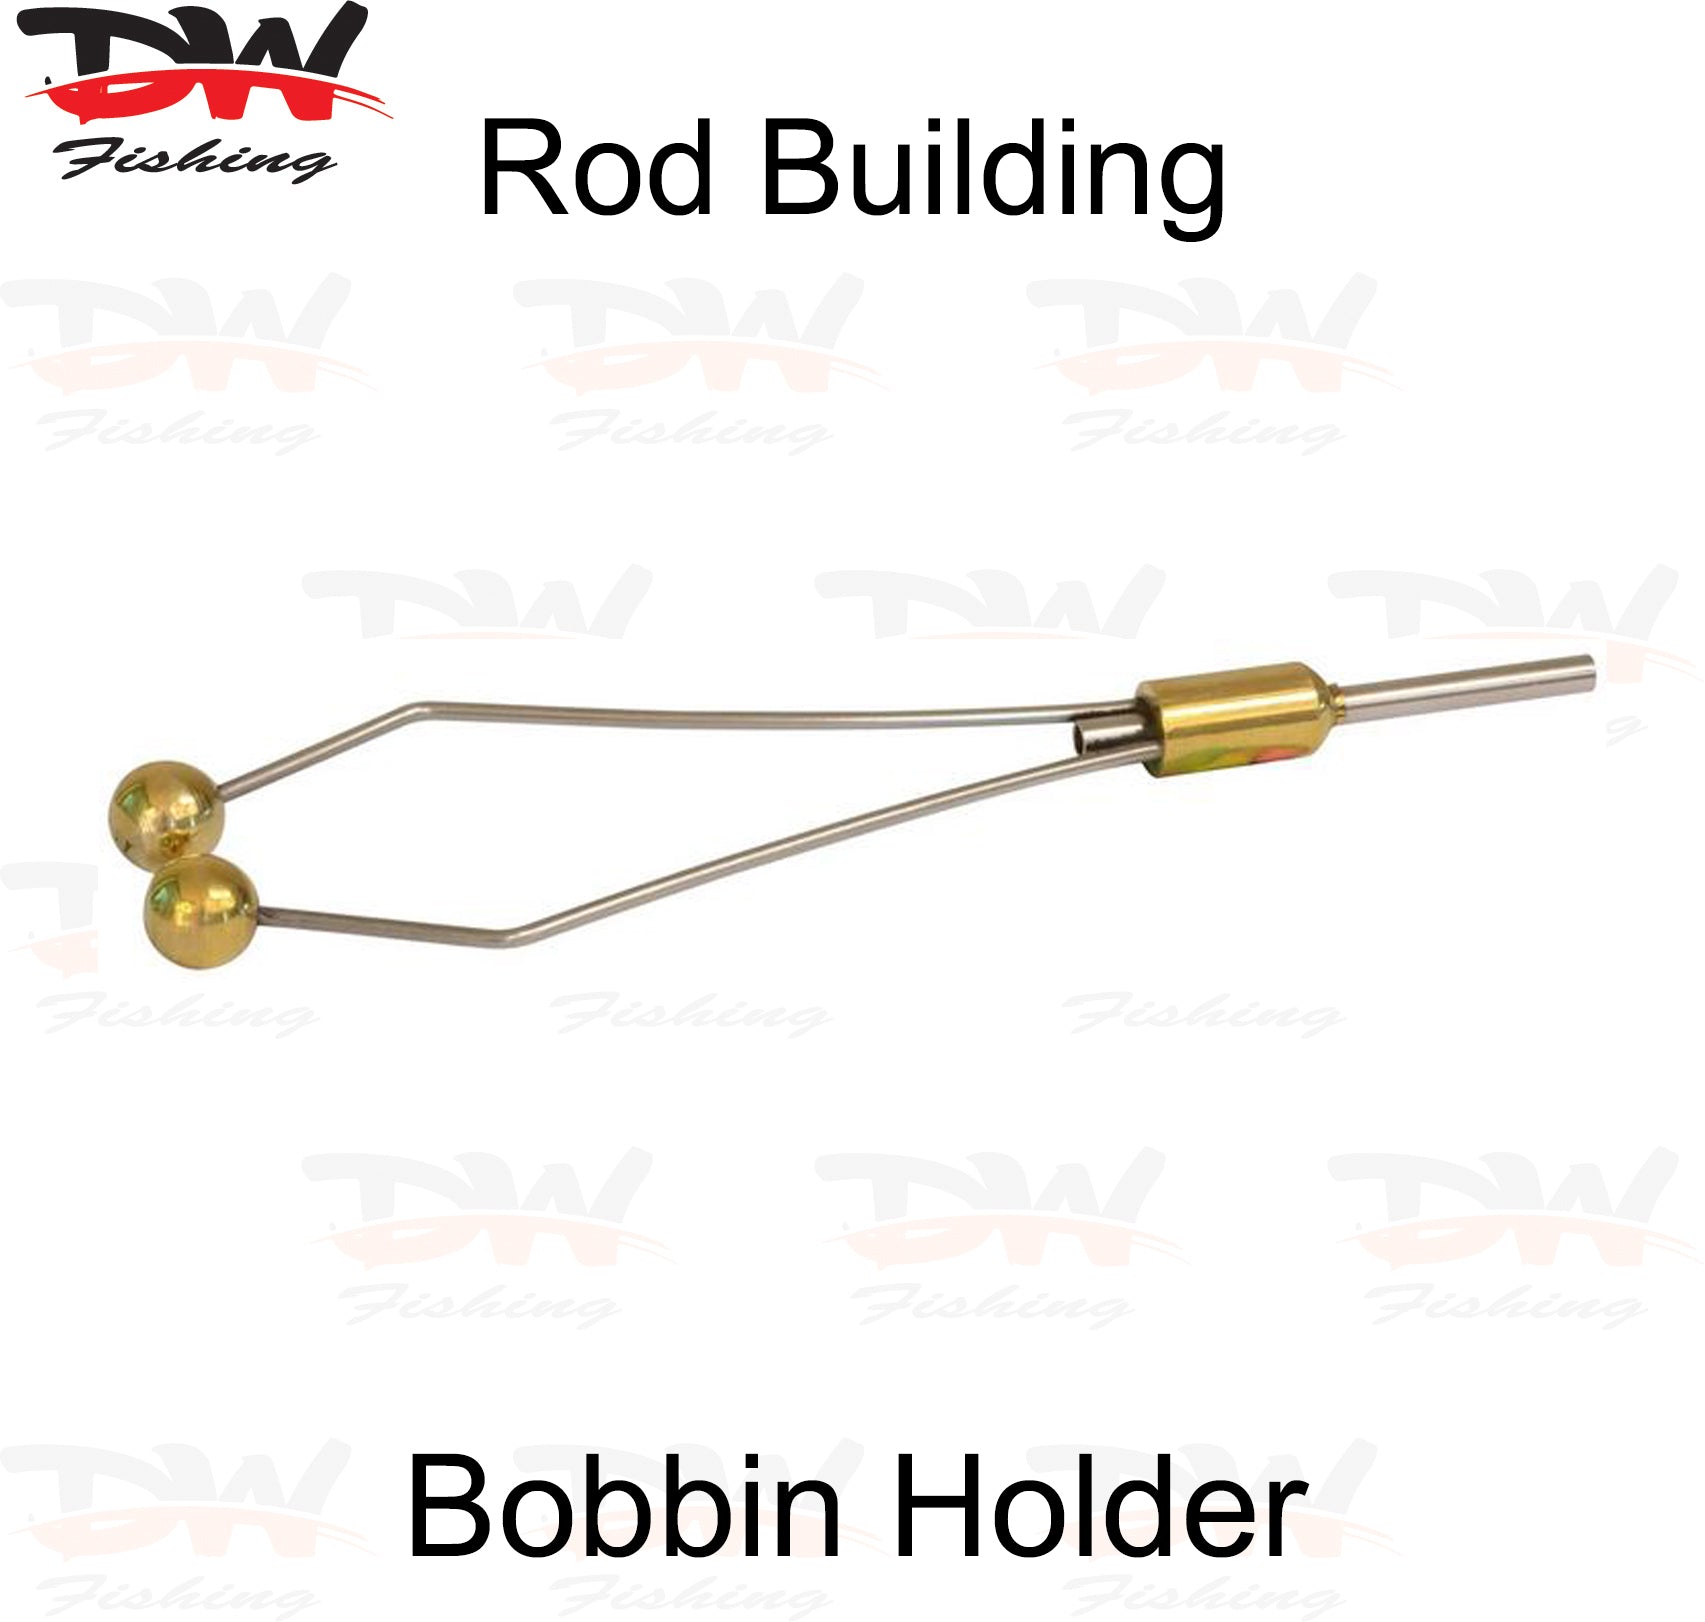 Rod Thread Tying Bobbin Holder, Rod Building